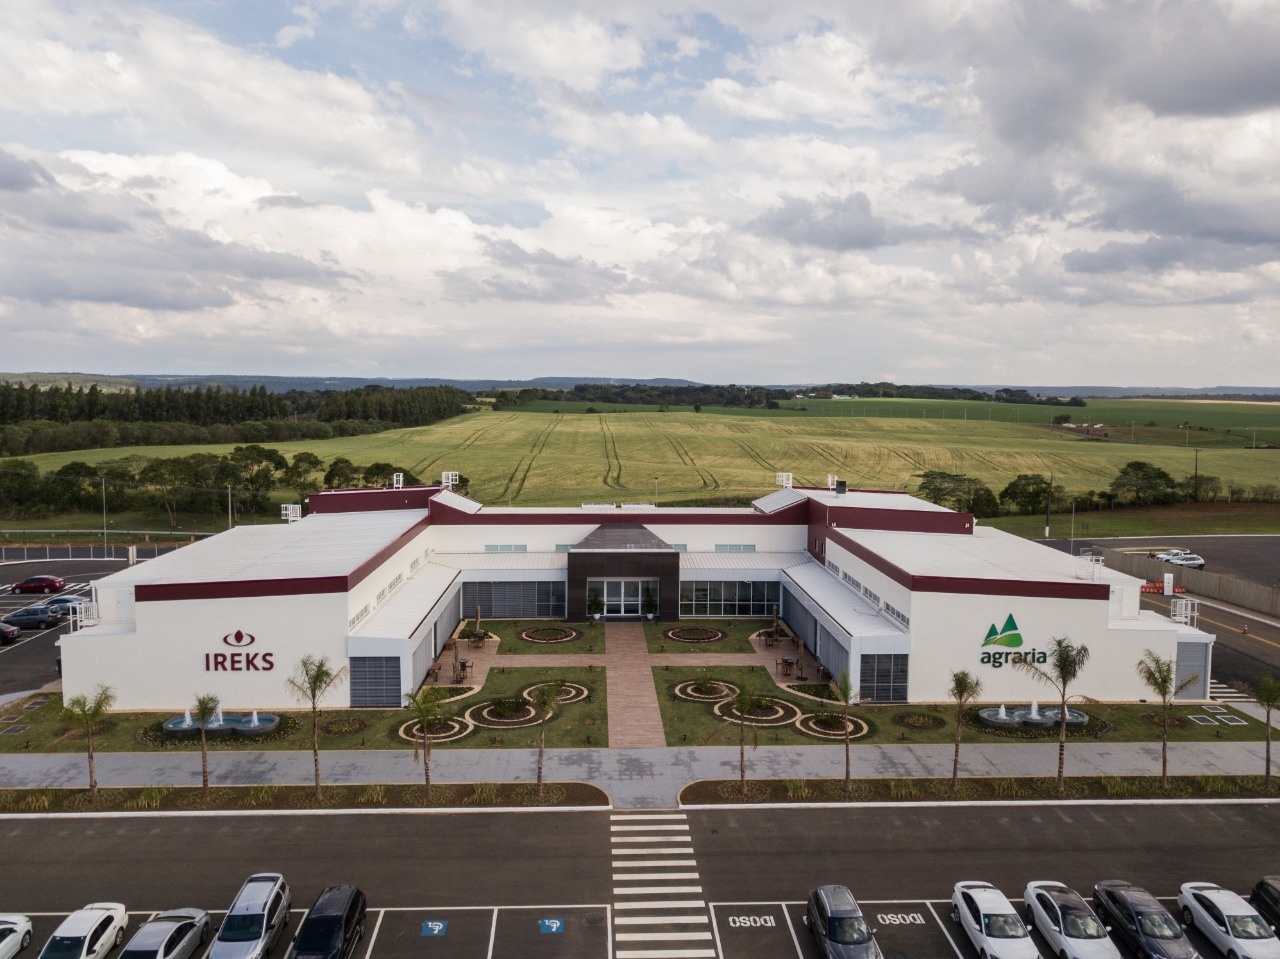 Die Akademie IREKS & Agrária wurde im Jahr 2019 in Vitória eingeweiht. <br/><br/>A Akademie IREKS & Agrária foi inaugurada na Colônia Vitória, em 2019. <br/>